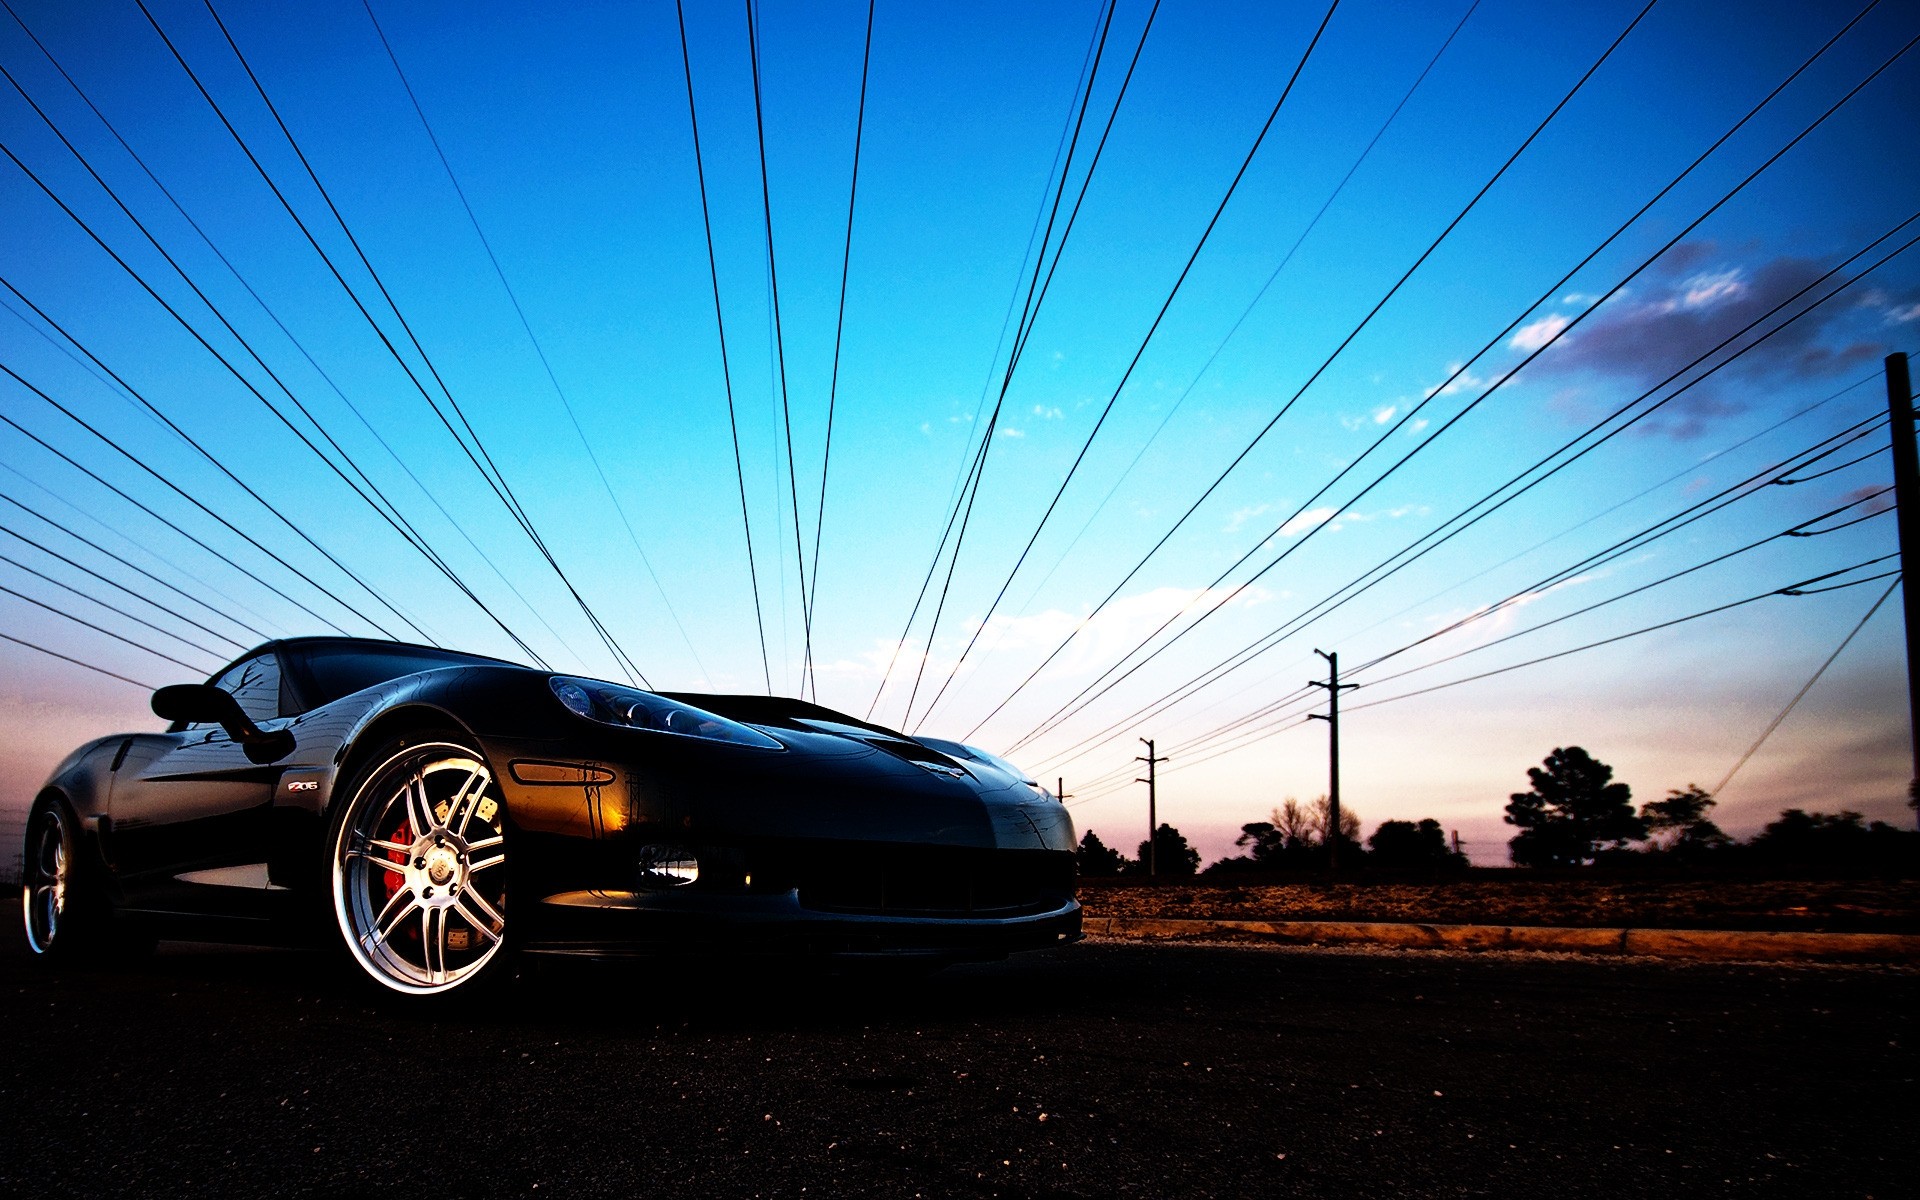 corvette transportation system vehicle sky car electricity power sunset energy sport cars background wallpaper